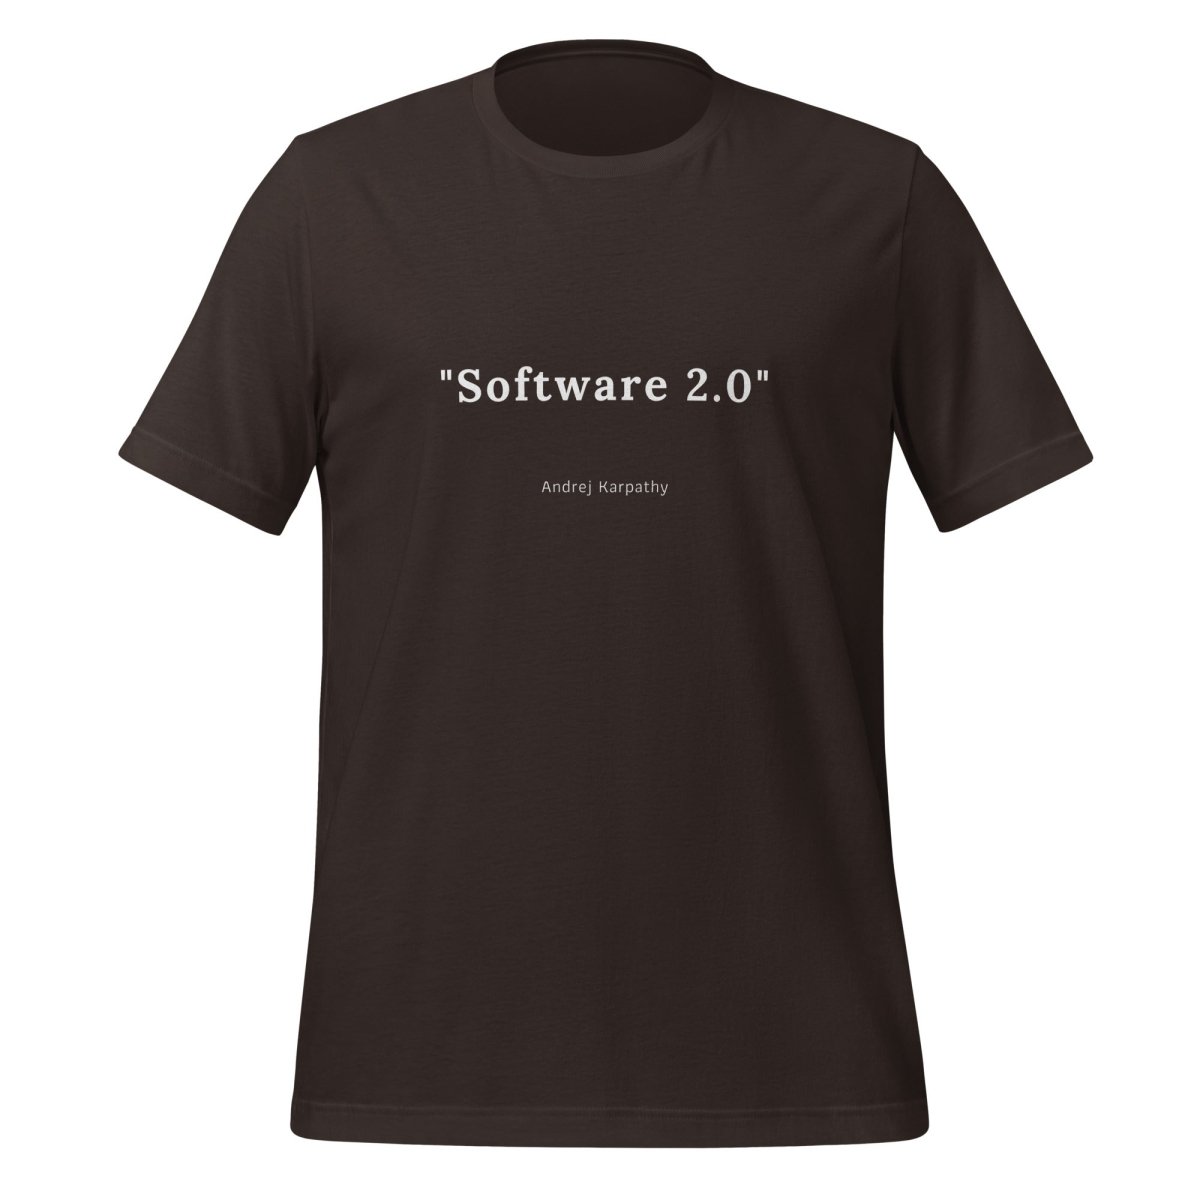 Software 2.0 [Andrej Karpathy] T - Shirt (unisex) - Brown - AI Store